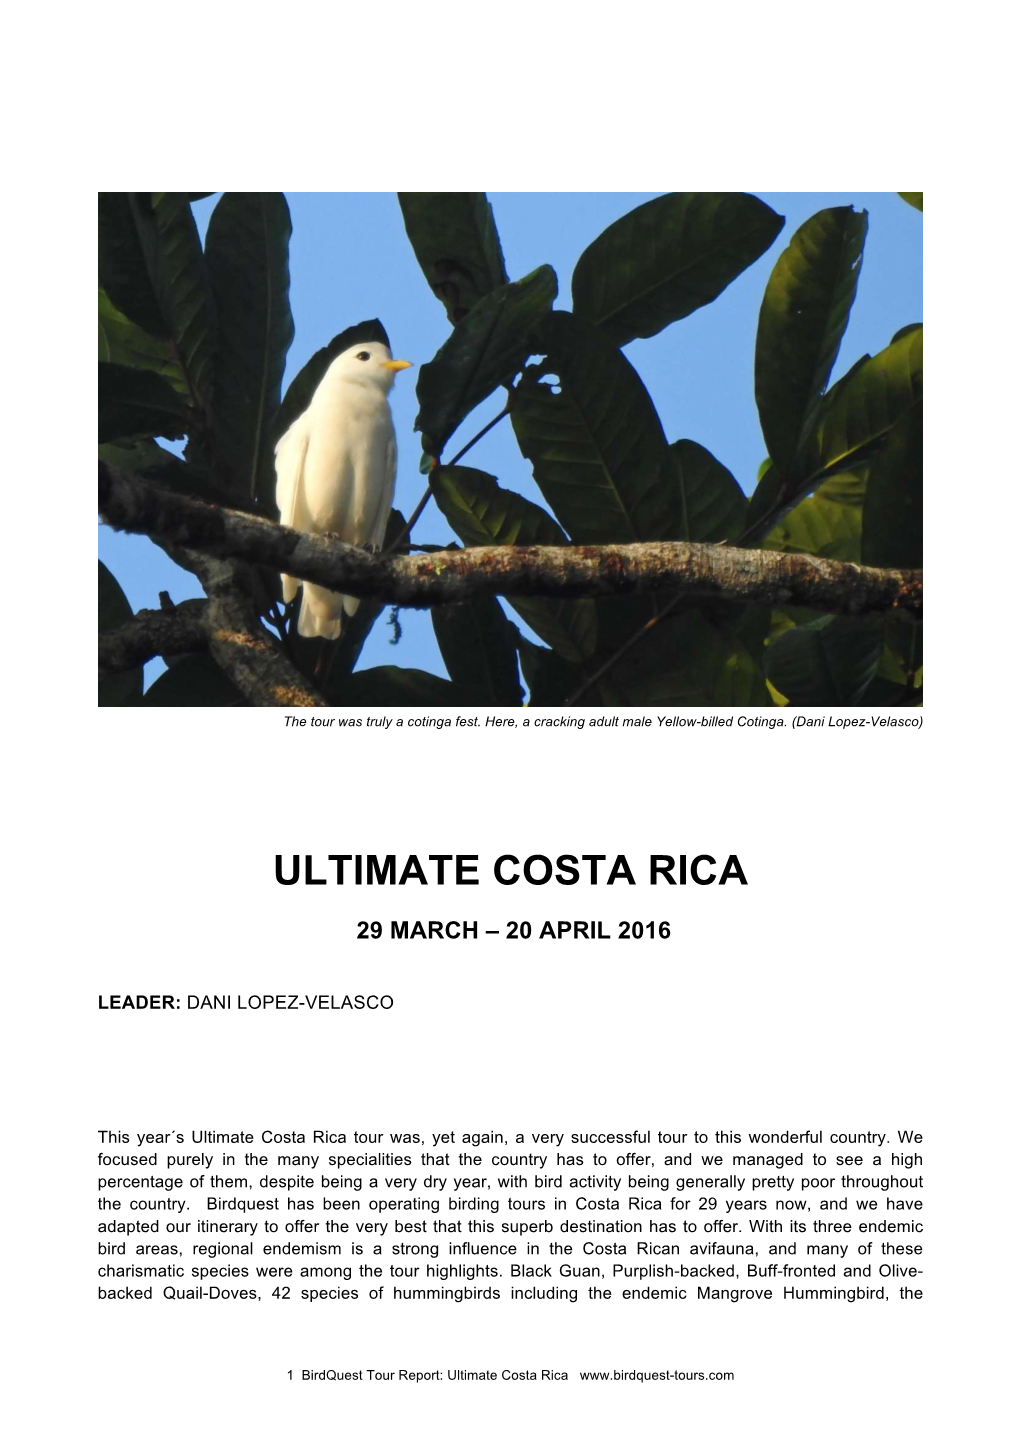 Ultimate Costa Rica